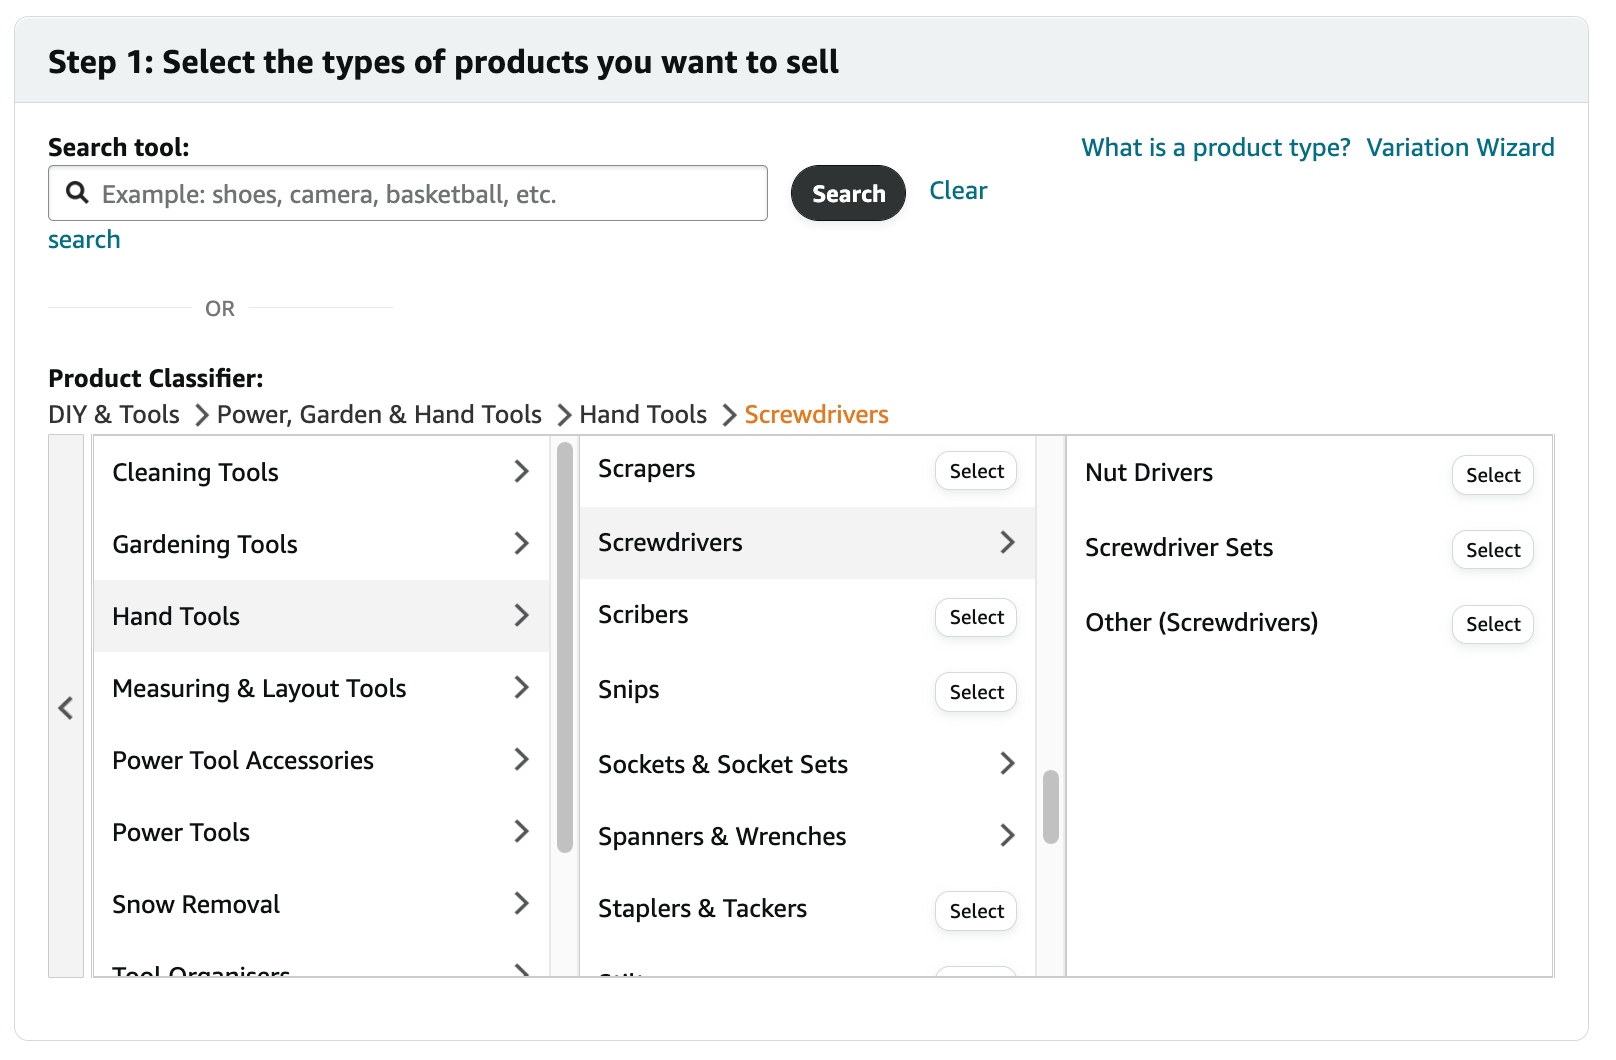 Amazon’s product categorization tree to aid customers